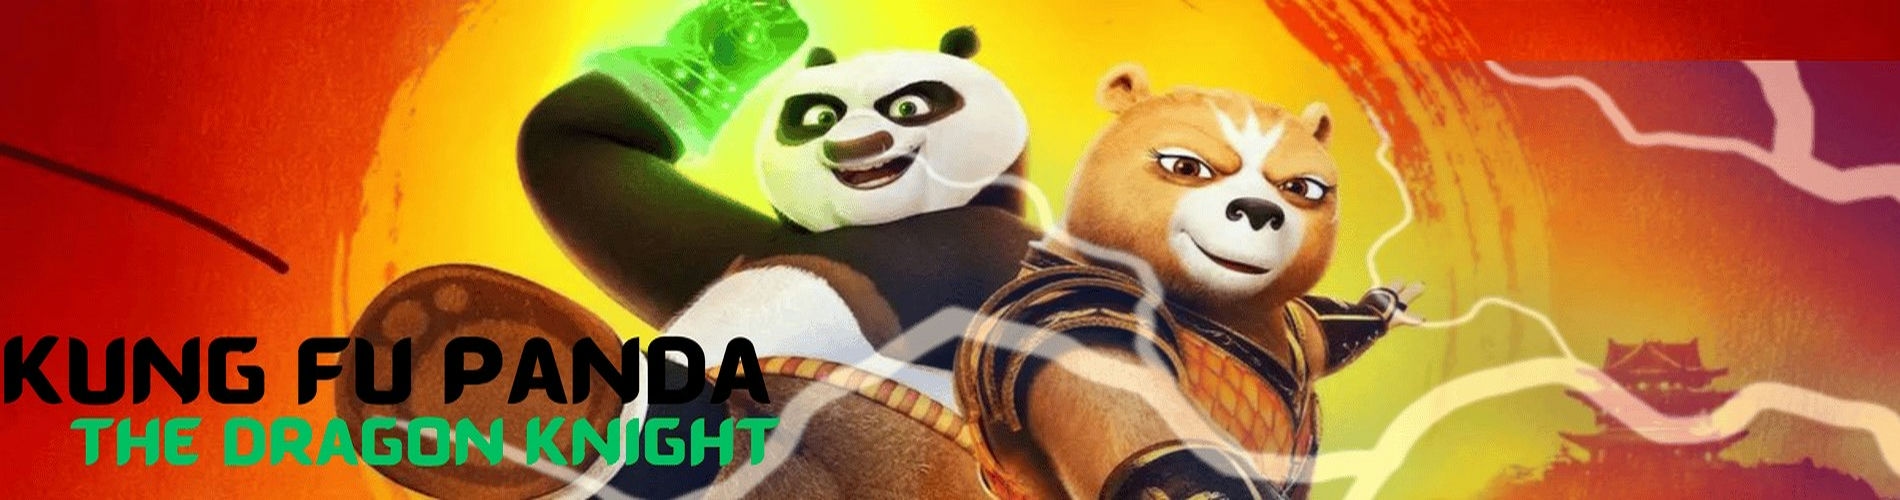 Kung Fu Panda the dragon night